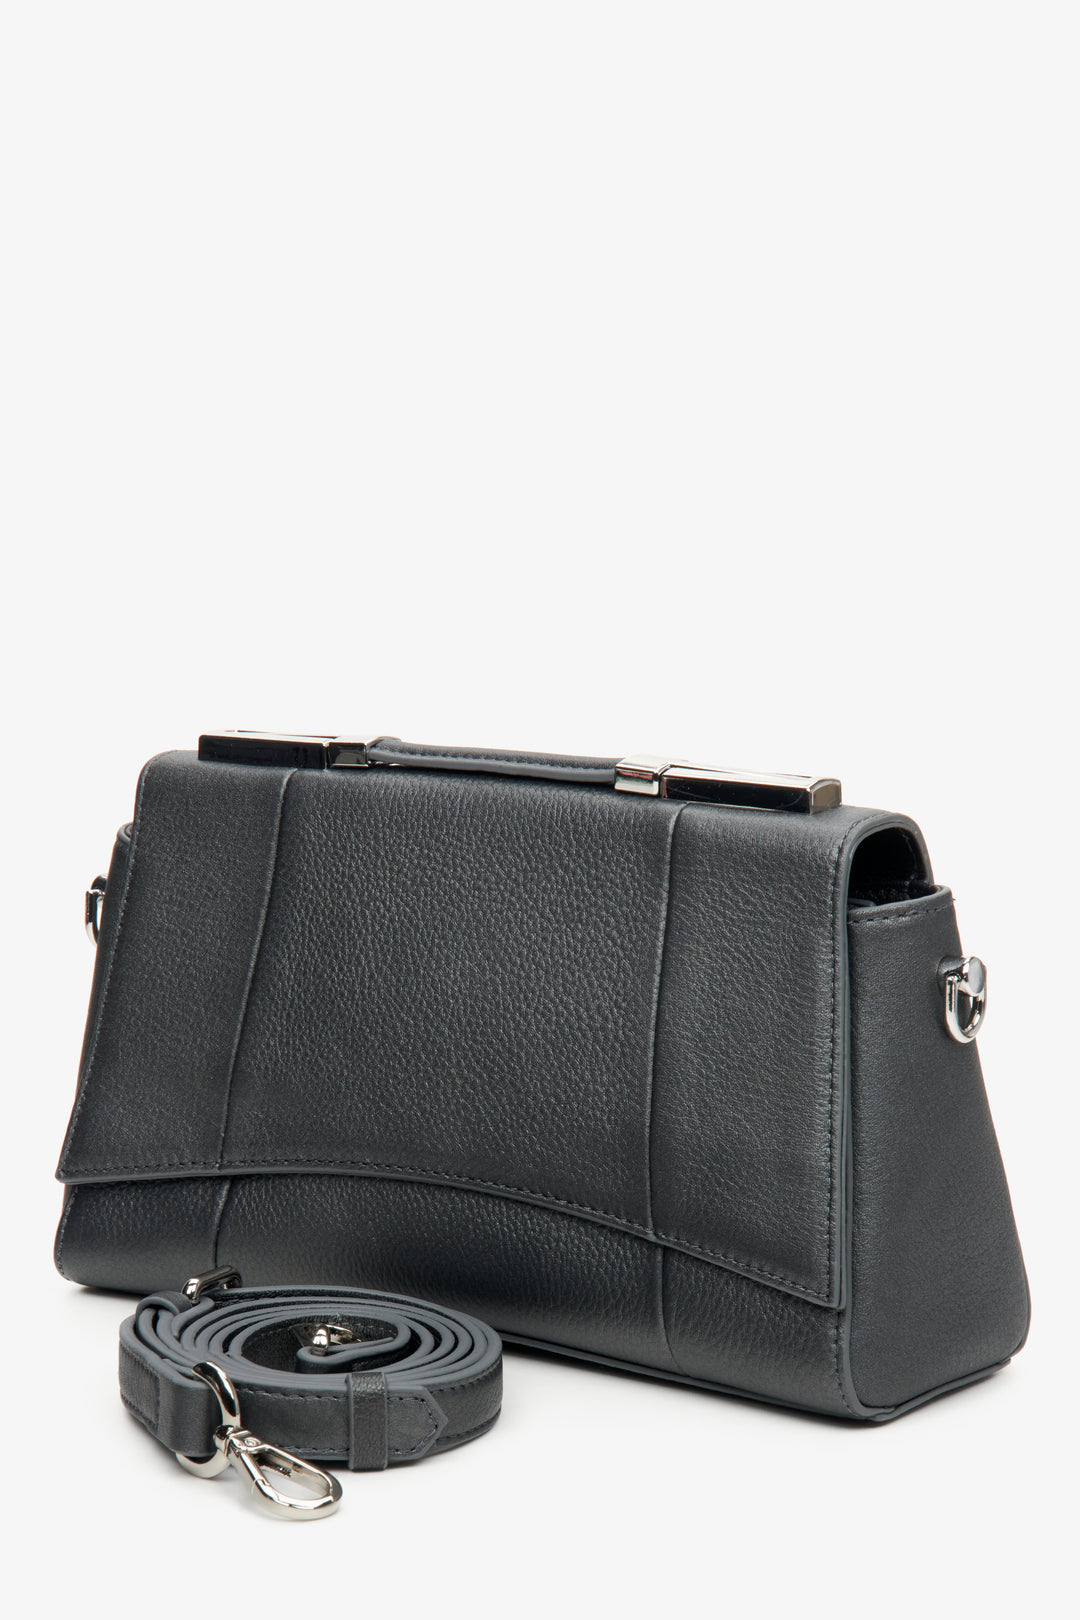 Women's dark grey shoulder bag with an adjustable strap.